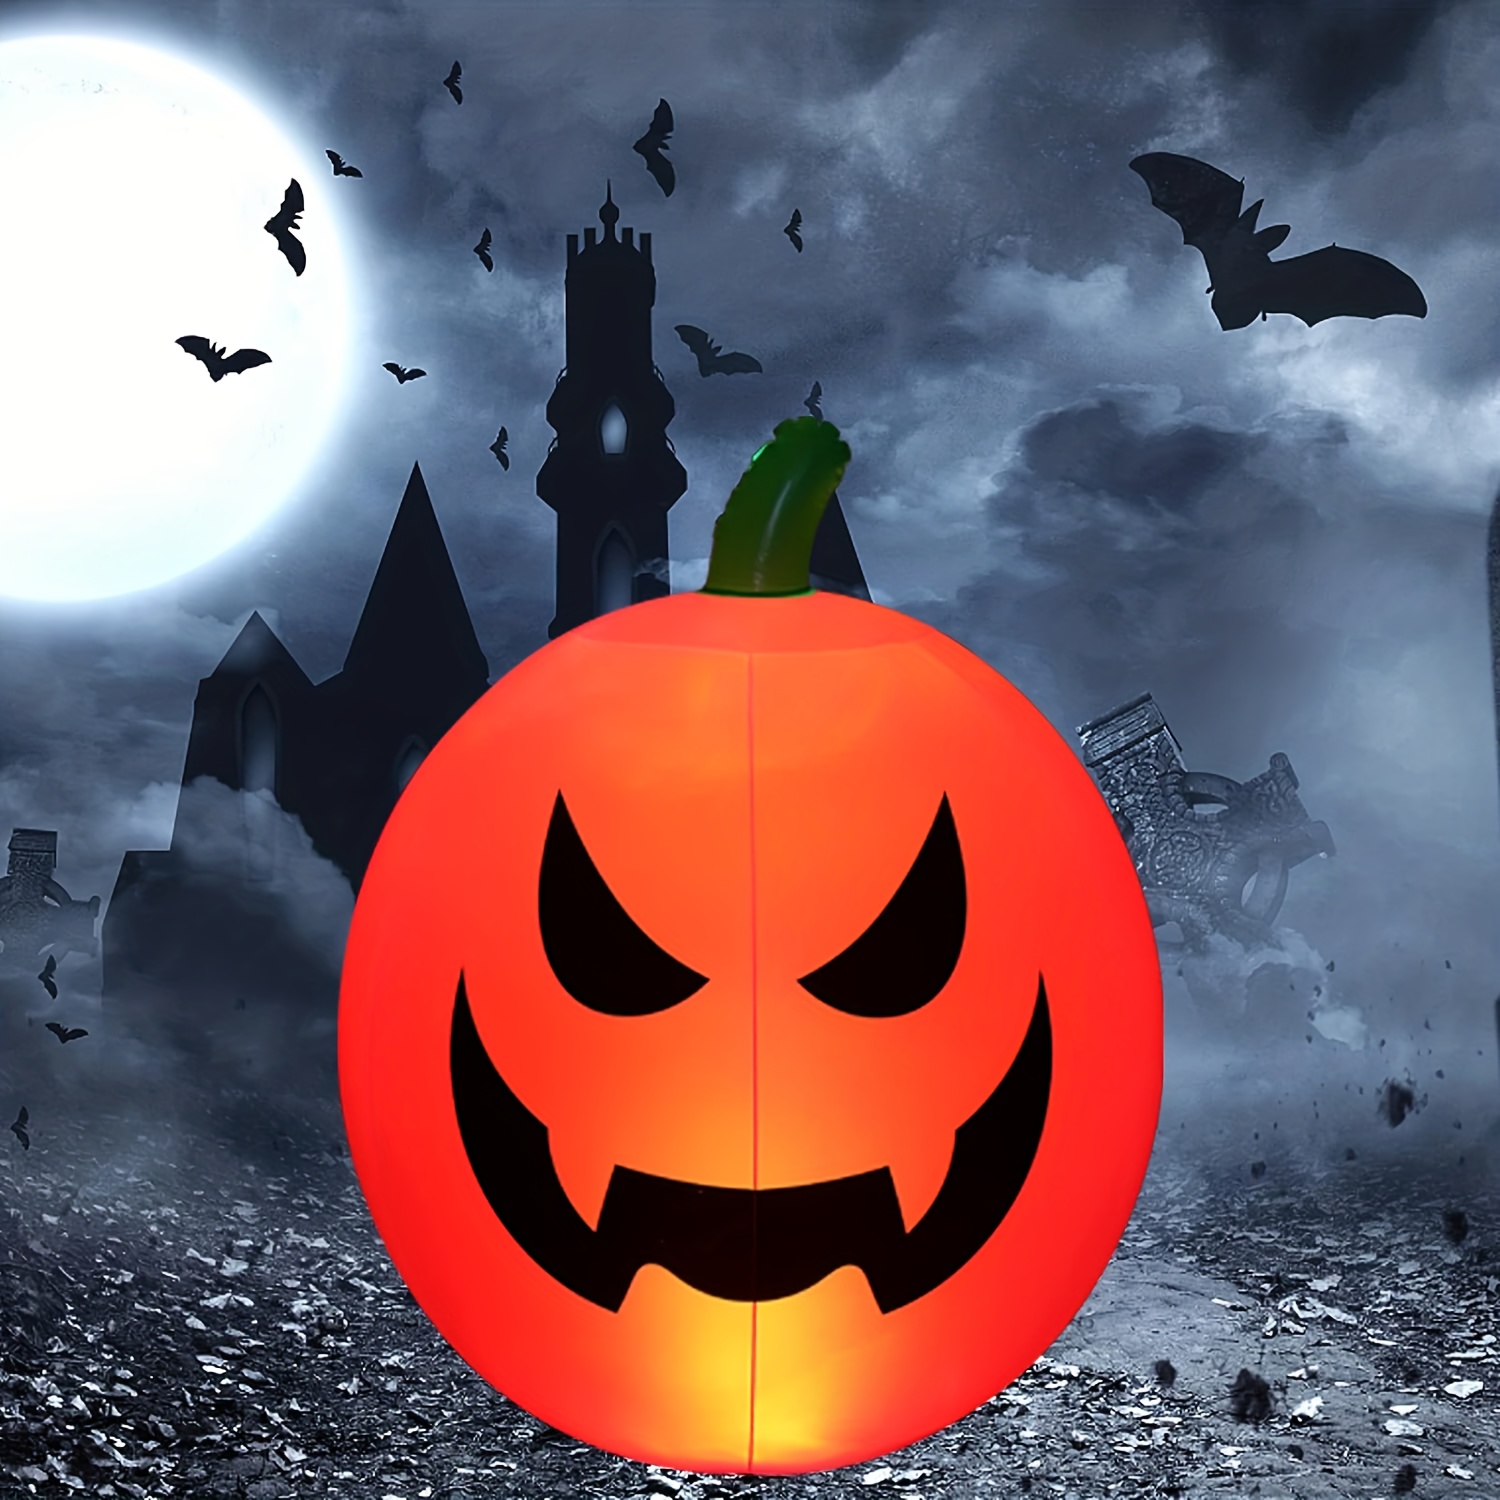 Halloween Inflatable Halloween Decor Blow-up Pumpkin With Built-in ...